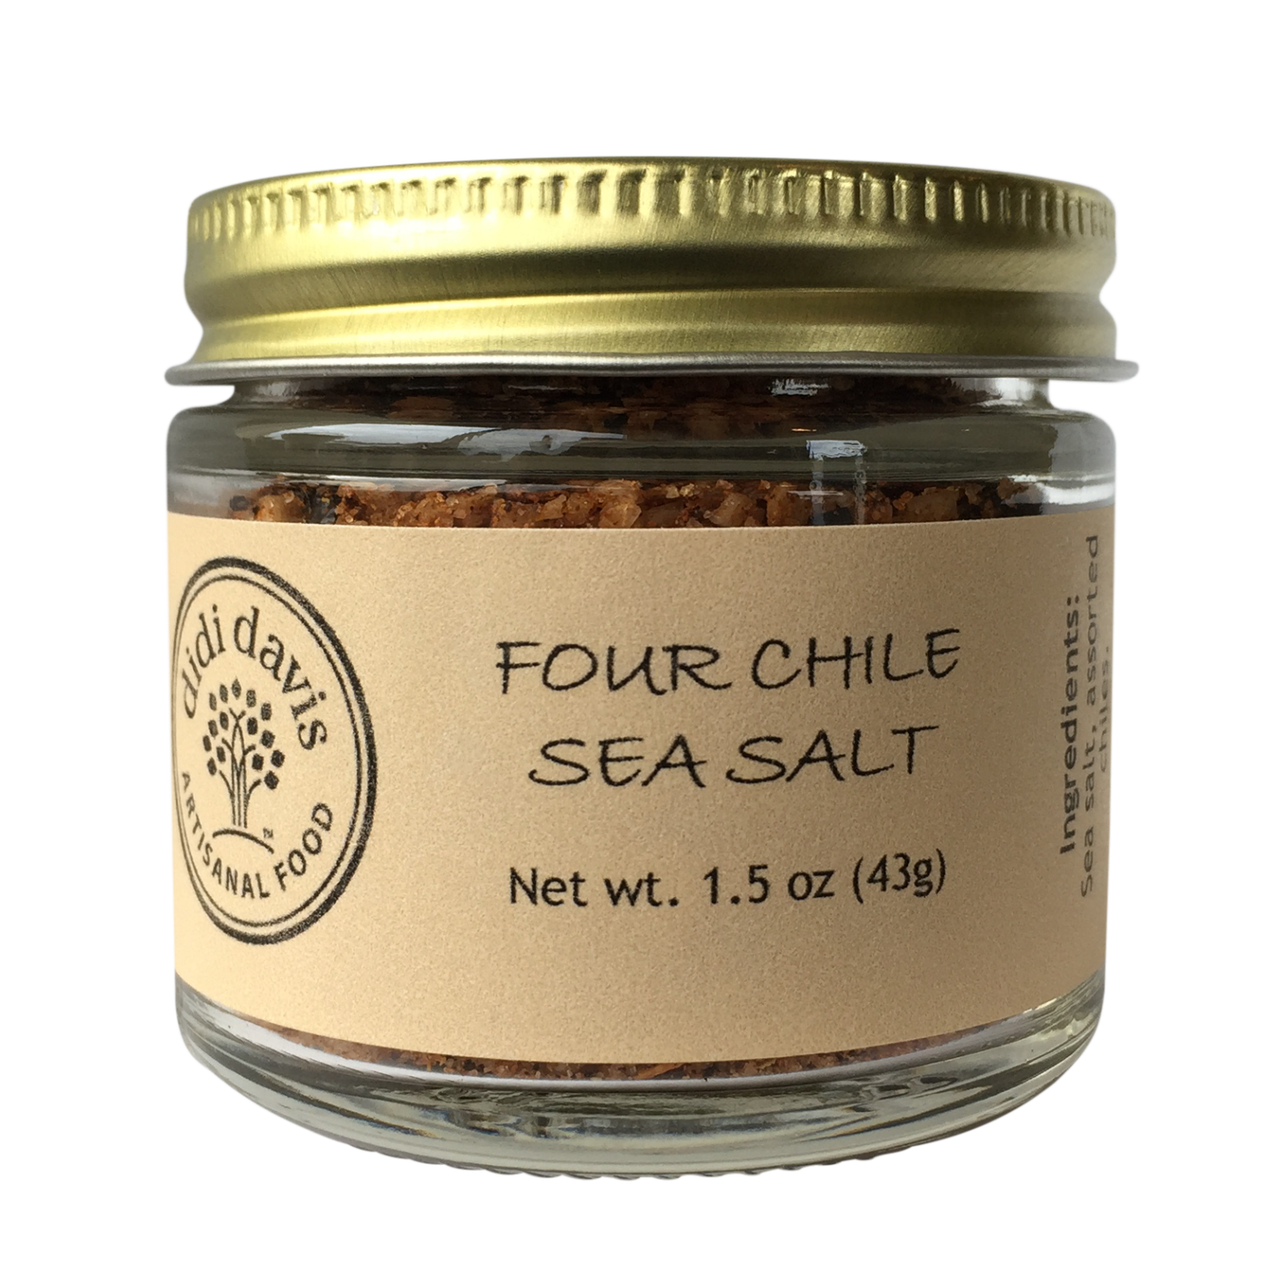 Four Chile Sea Salt Blend